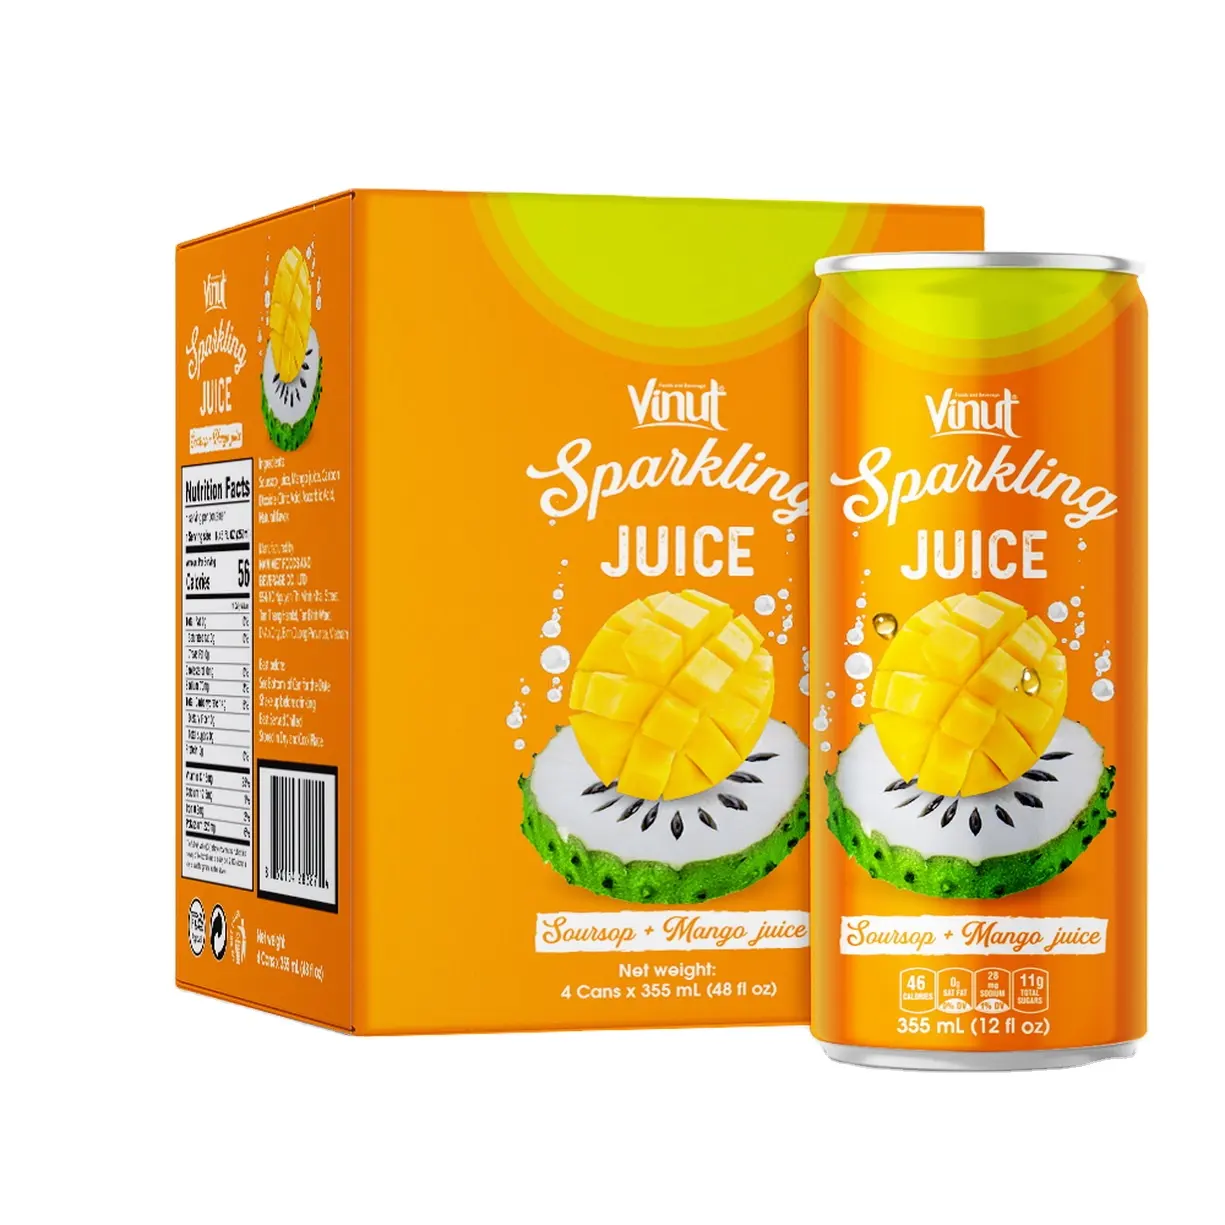 12 floz VINUT 4 Dosen Sprudel wasser Soursop & Mango Juice Distribution NFC Gesunde Getränke Private Label Bulk Selling